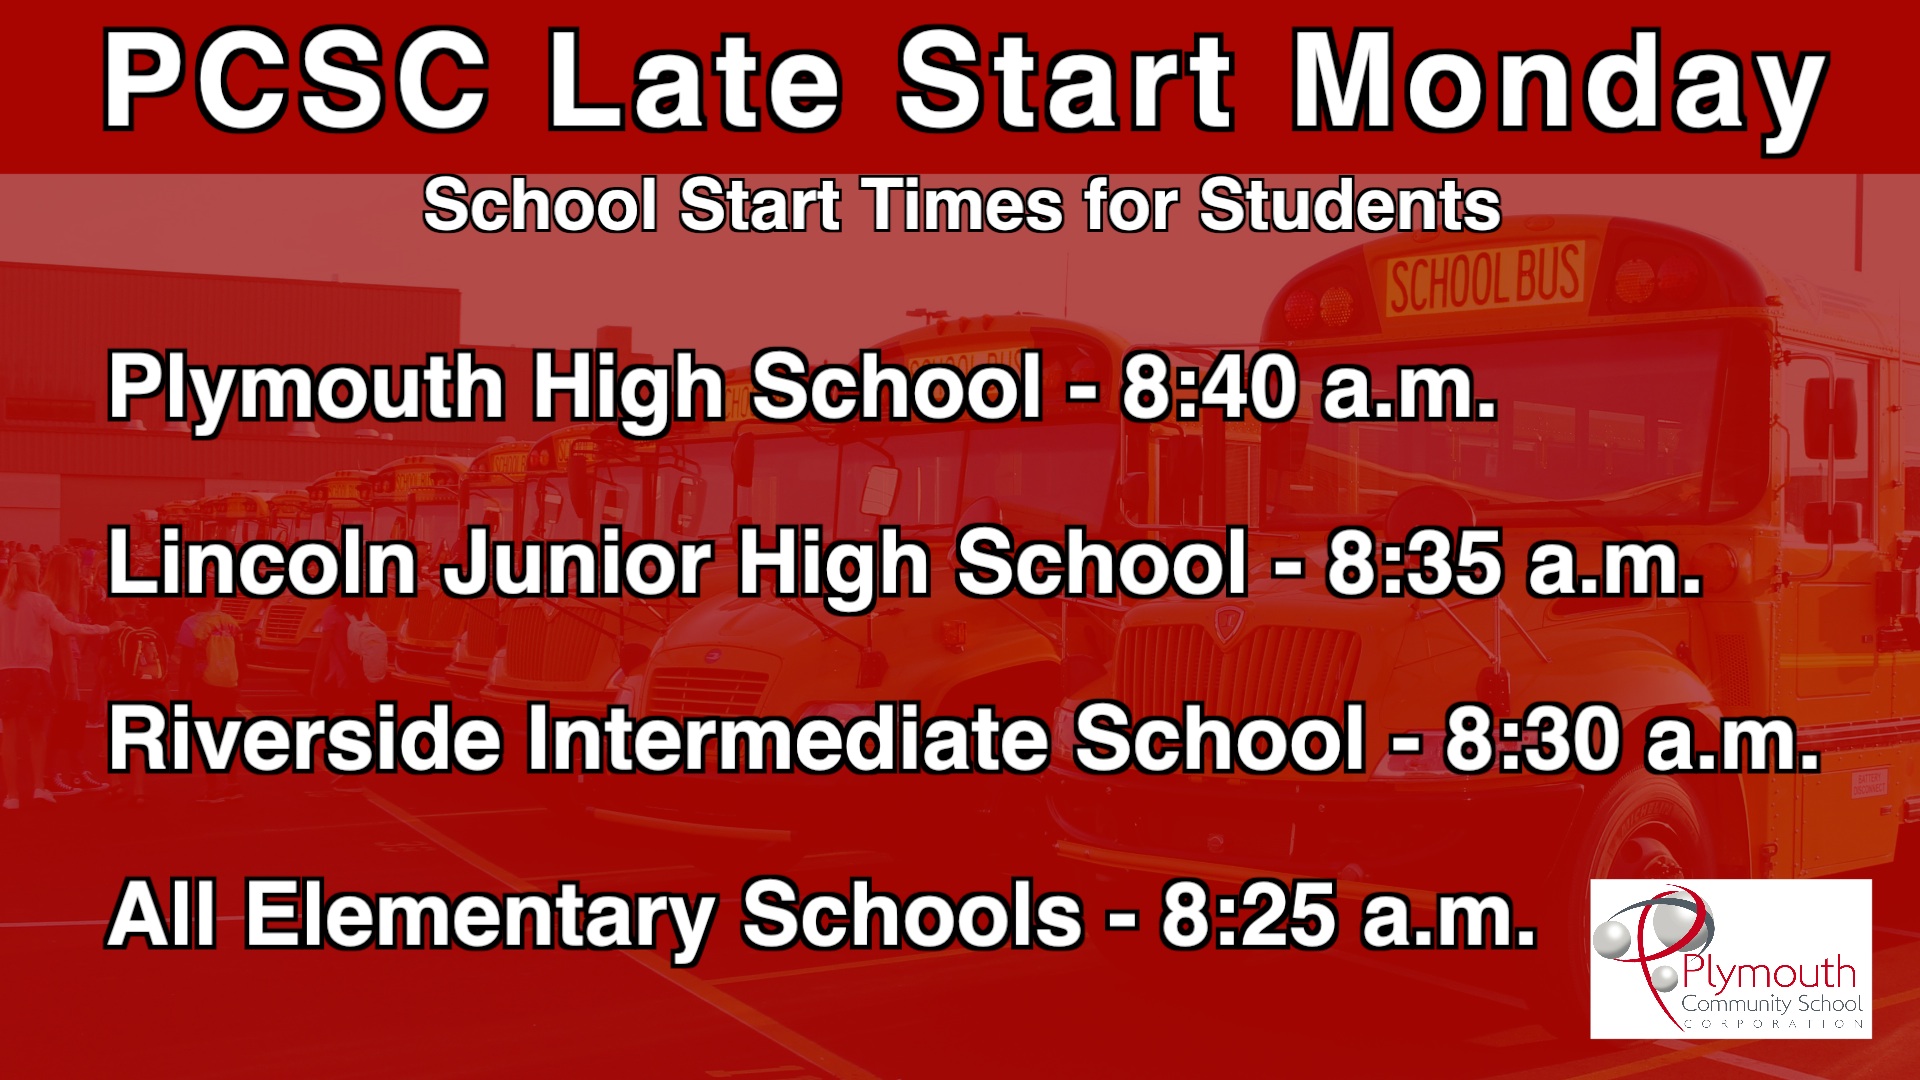 PCSC Late Start Mondays Information